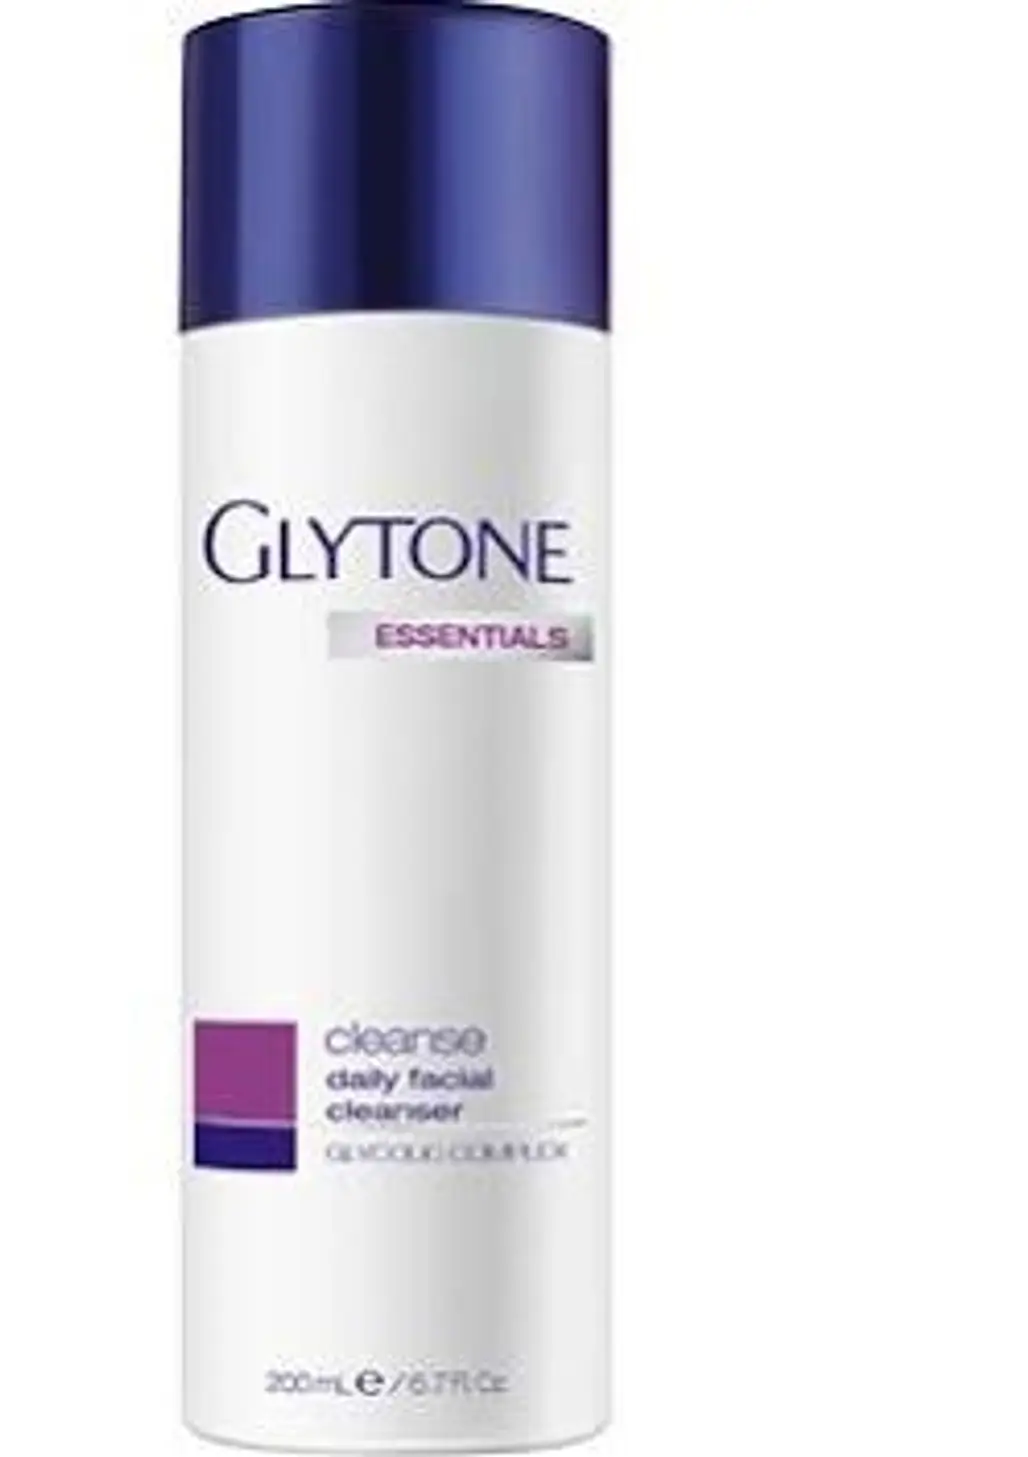 Glytone Daily Facial Cleanser